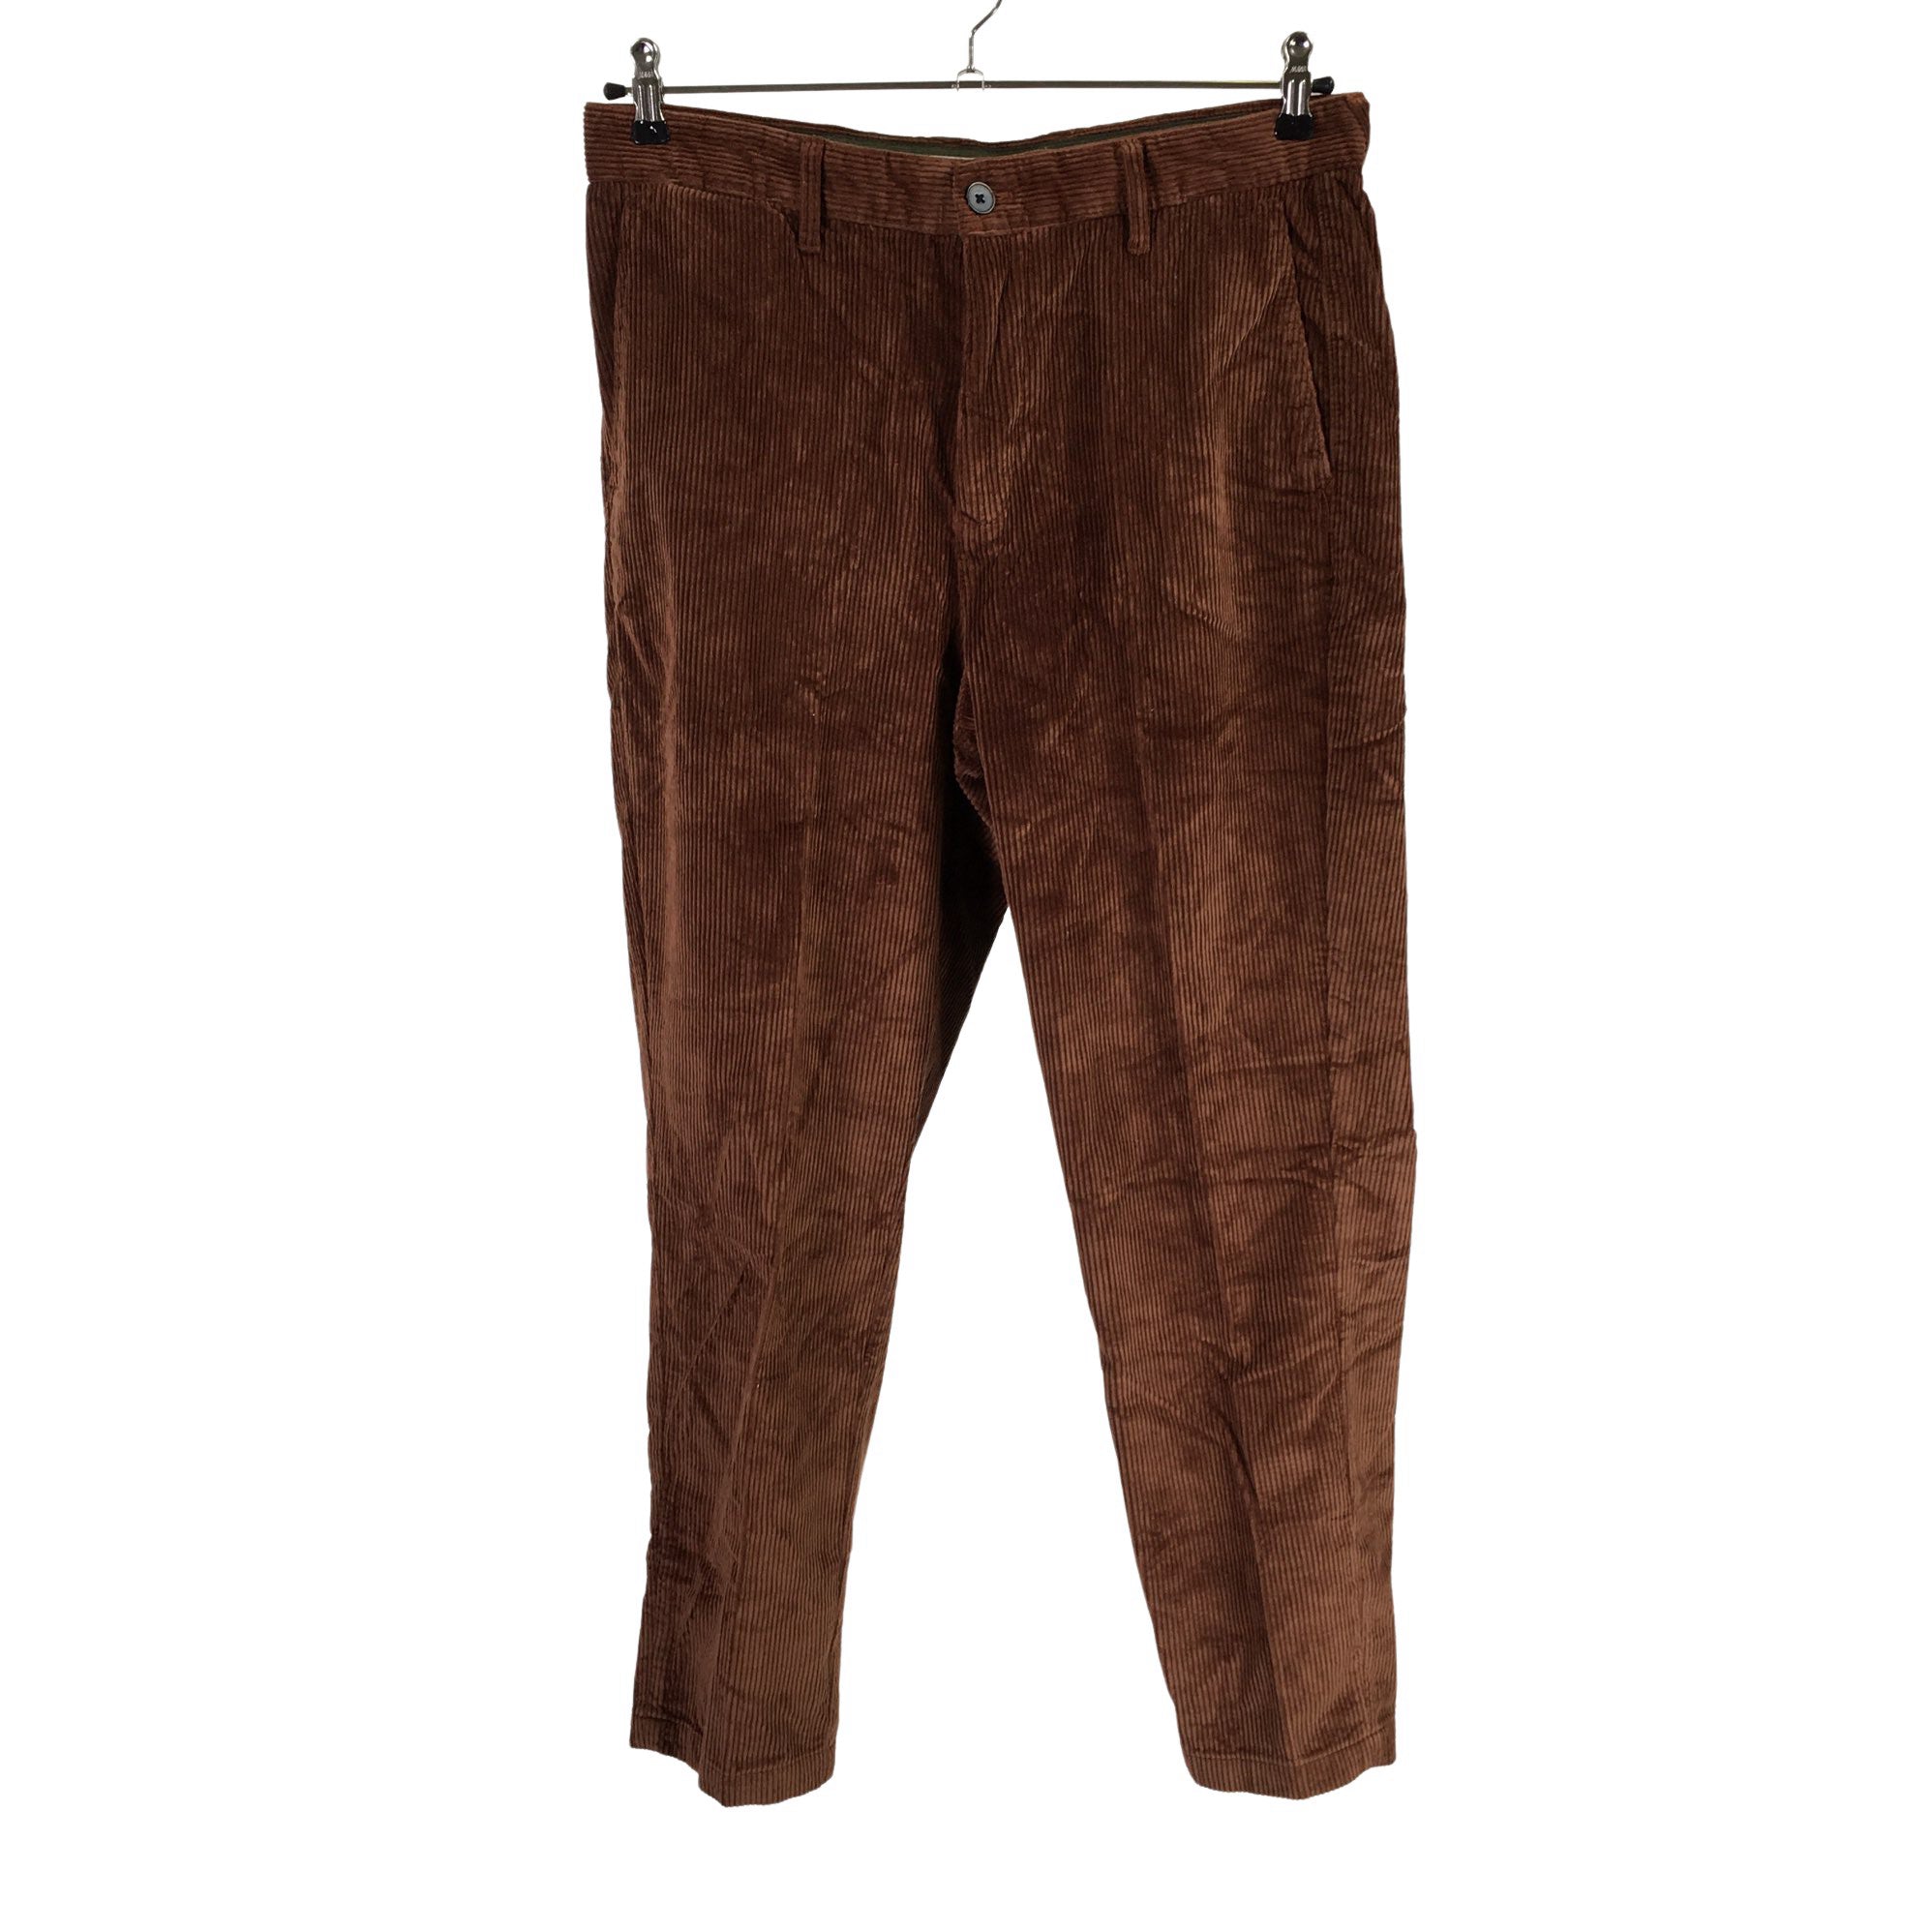 Zara Purple Velvet Trousers Flash Sales - tundraecology.hi.is 1694454575